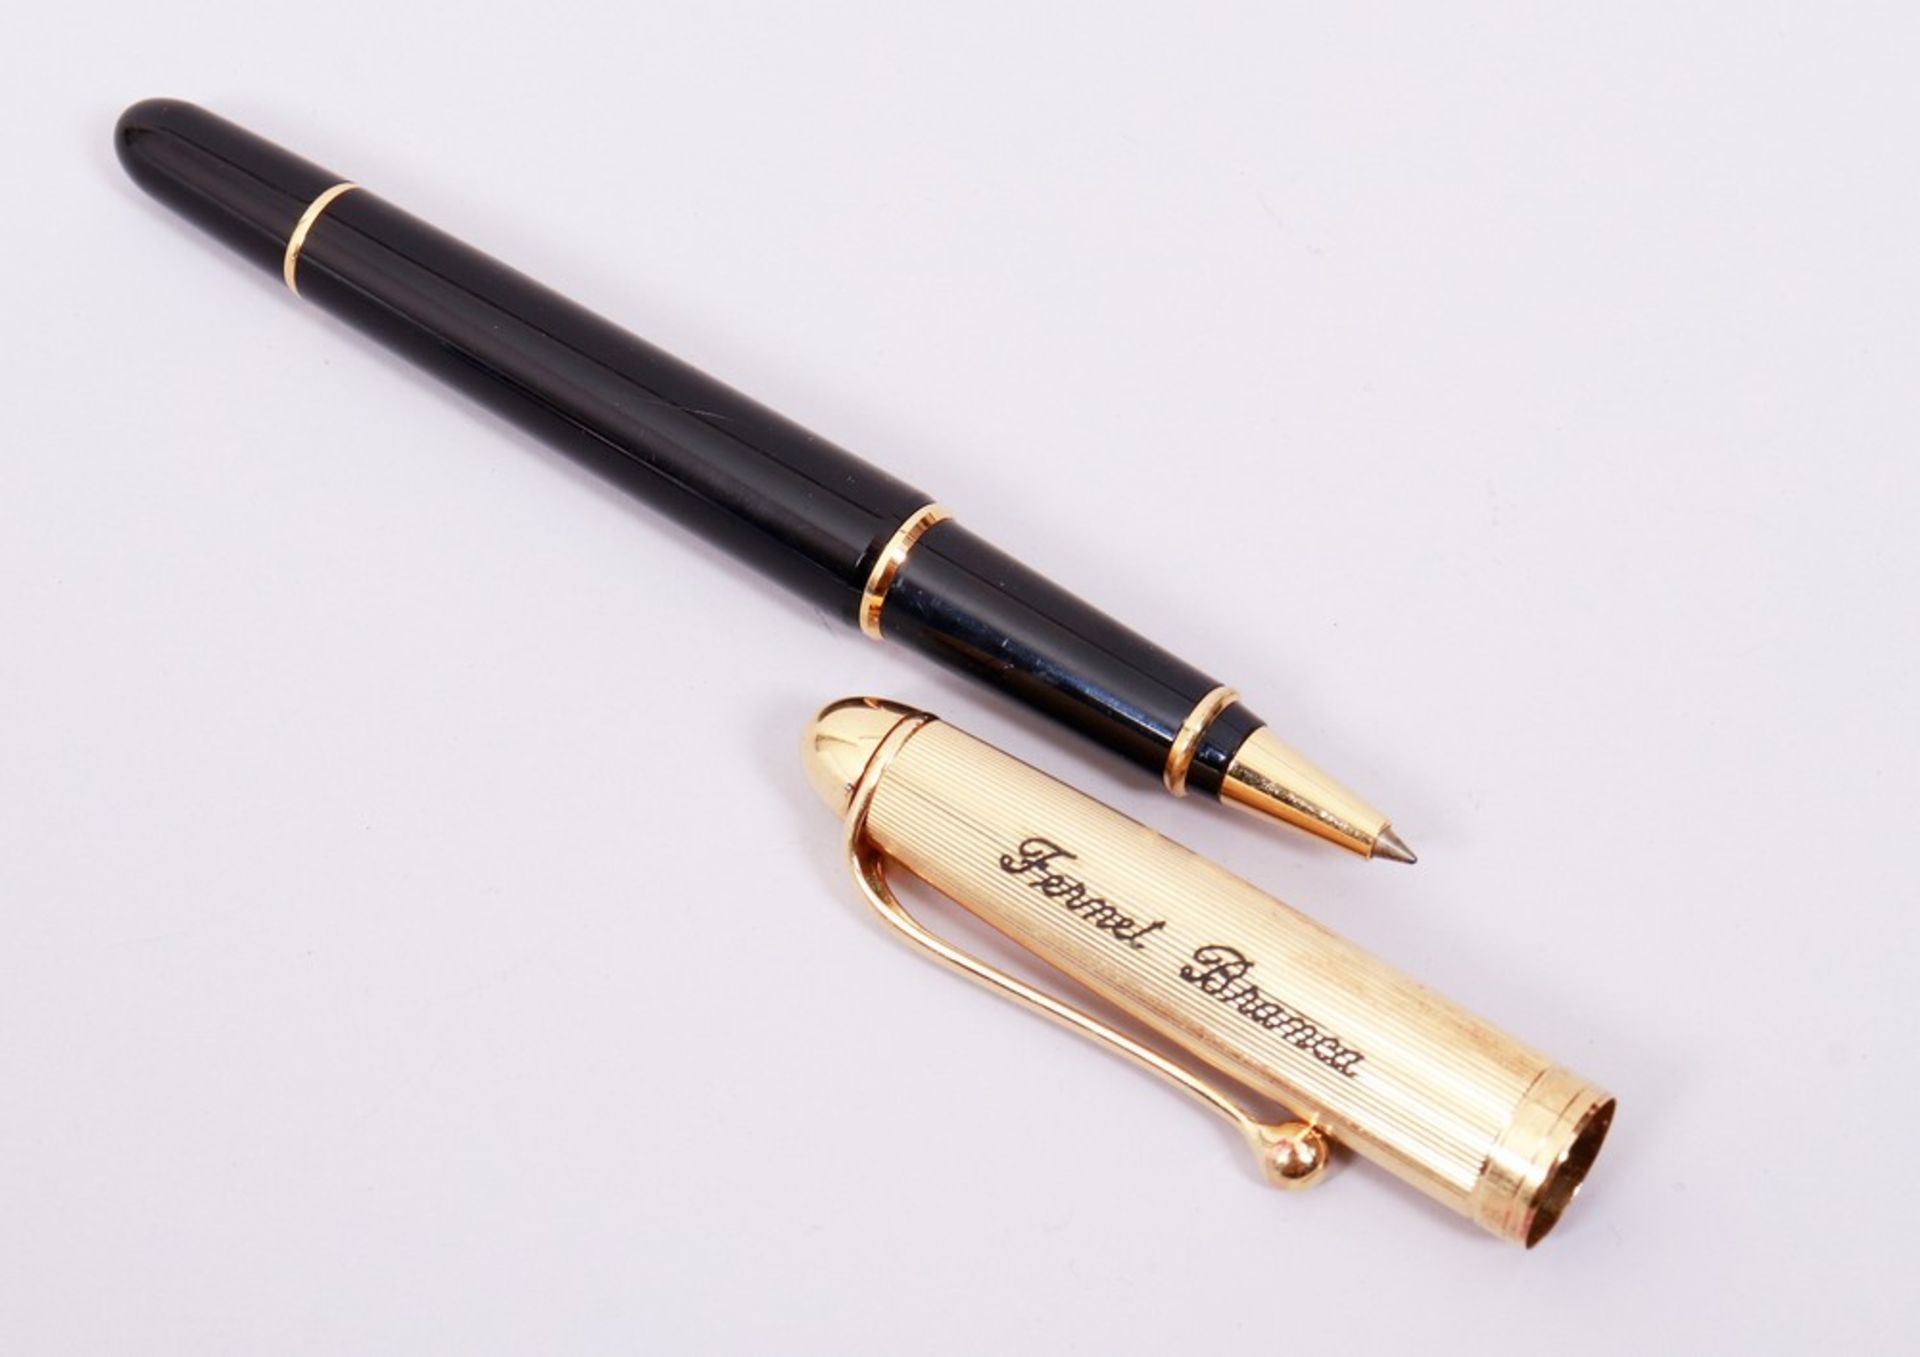 Ballpoint pen, Aurora, Italy, model "88", 21st C. - Image 2 of 4